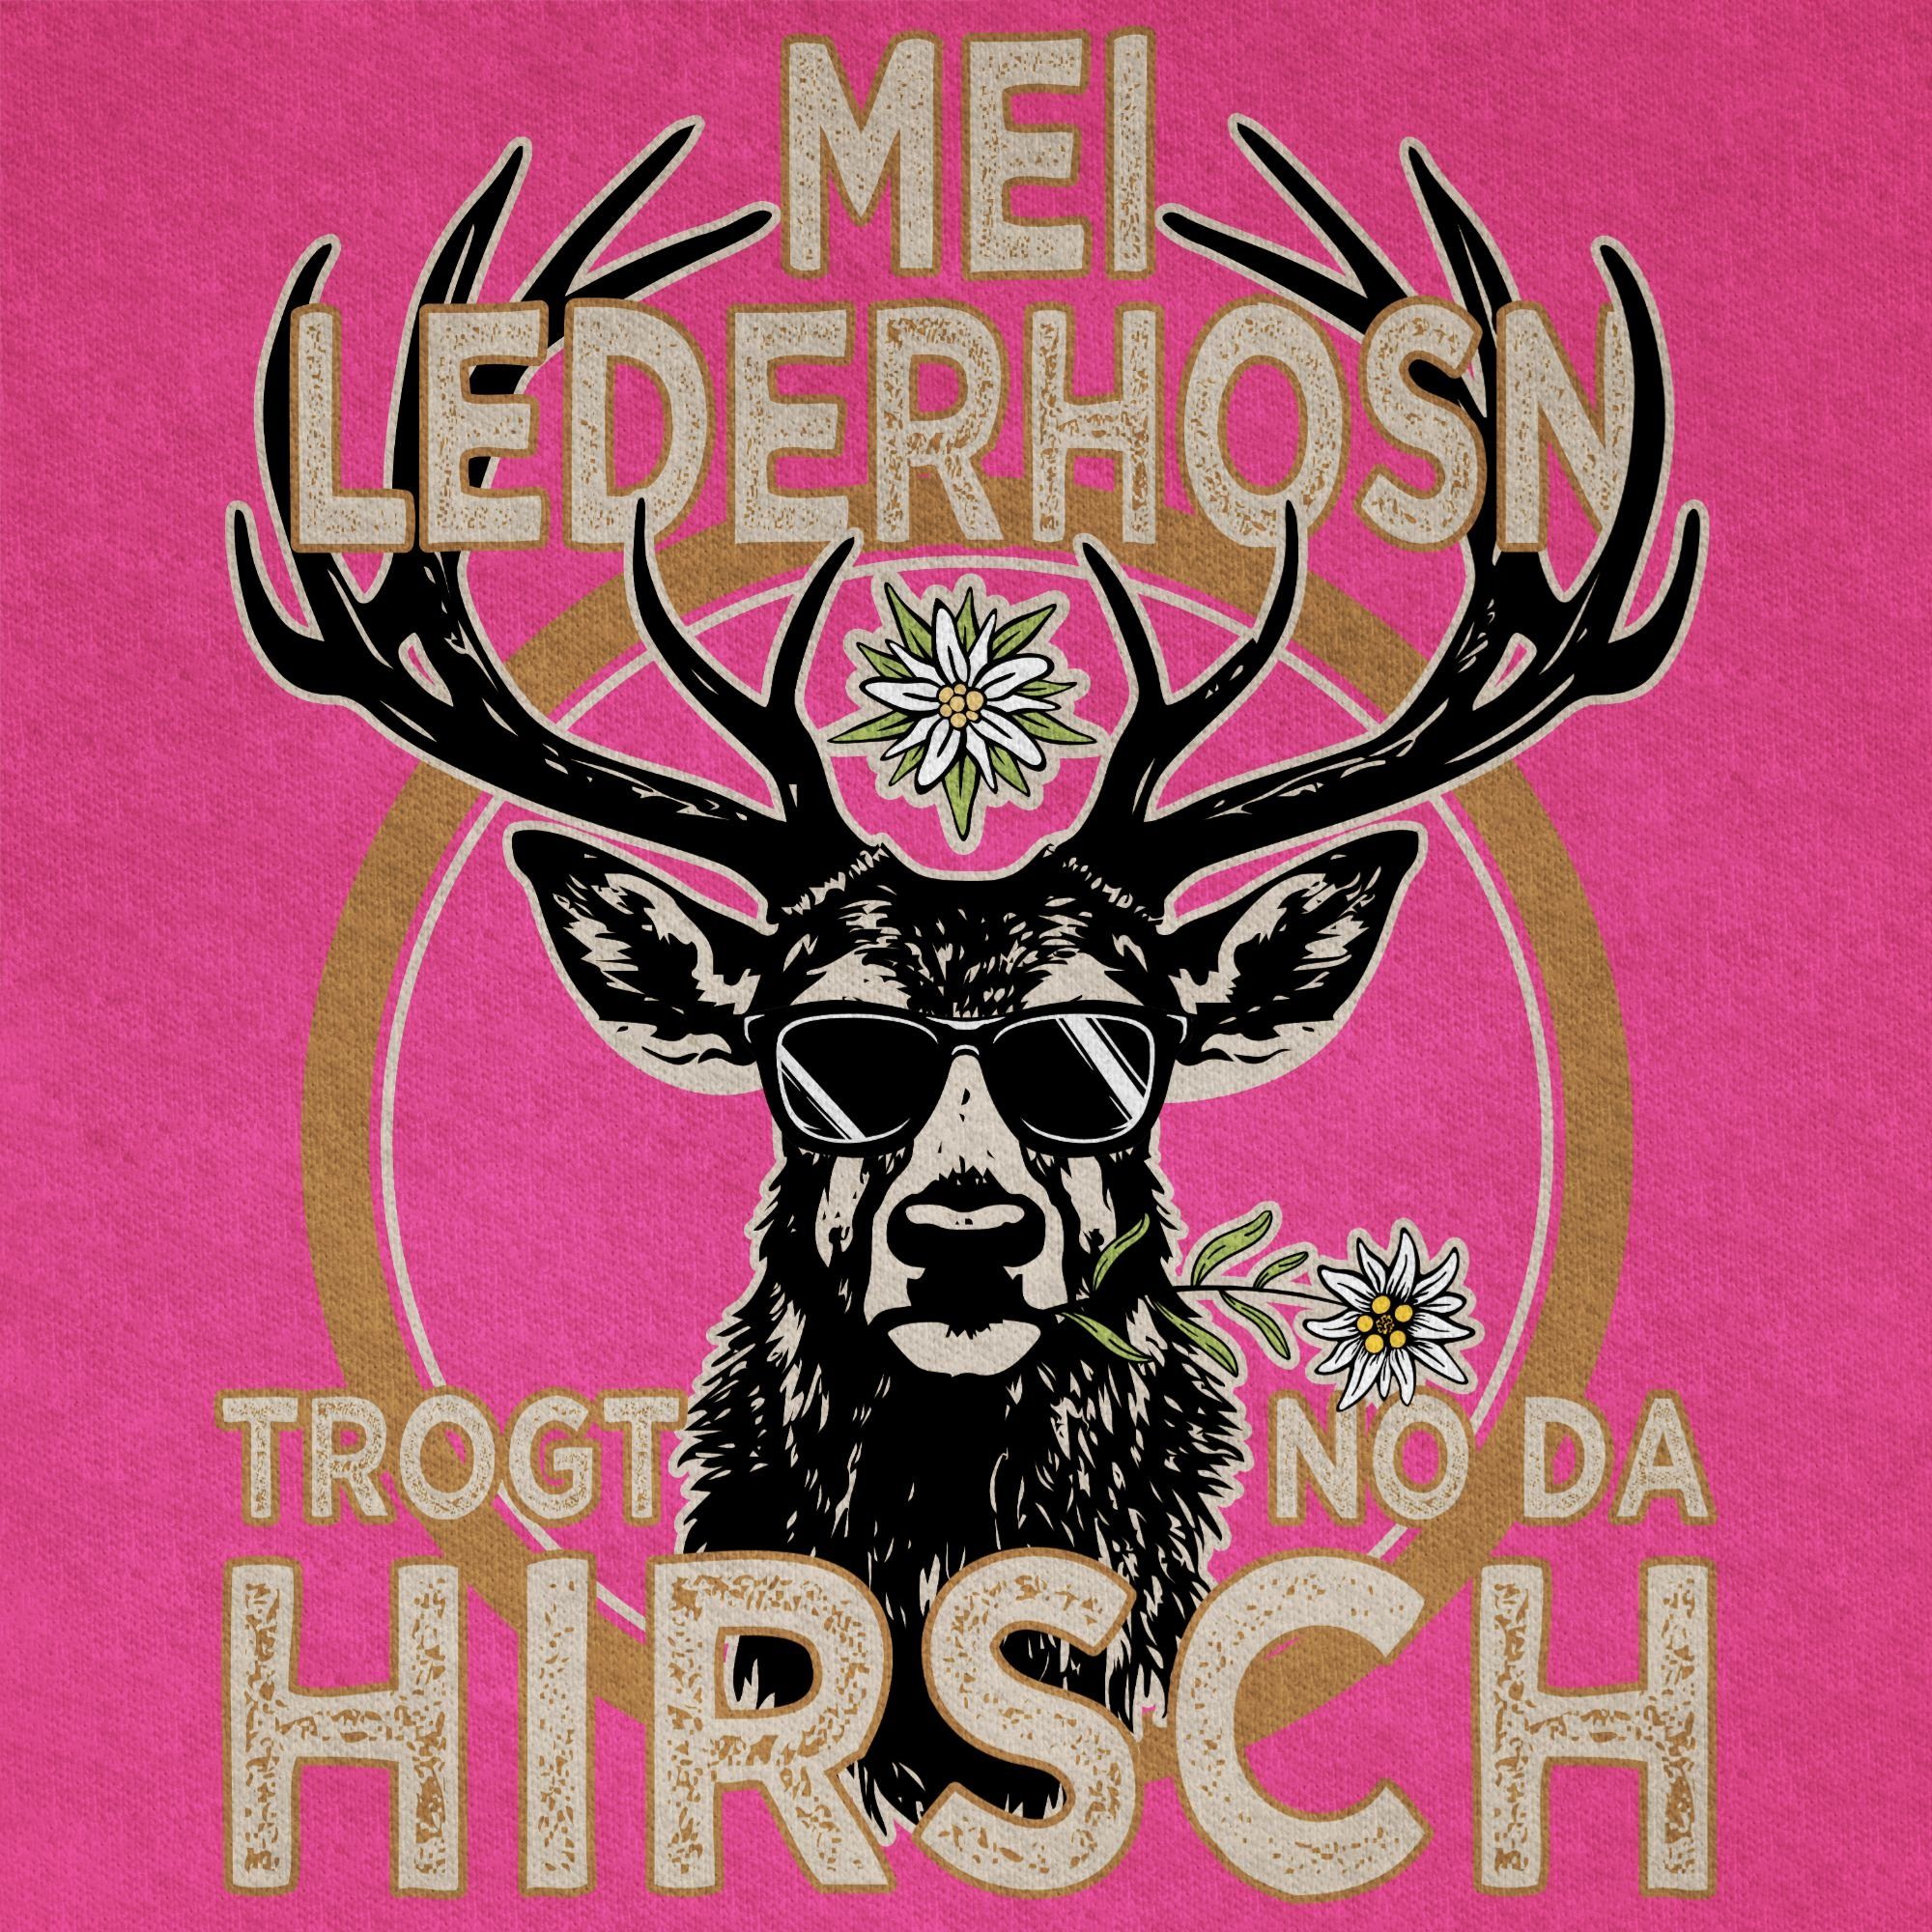 der Fuchsia Kinder Trägt Lederhose Mode Spruch Outfit für Outfit Hirsch 03 Oktoberfest T-Shirt Shirtracer Trachten